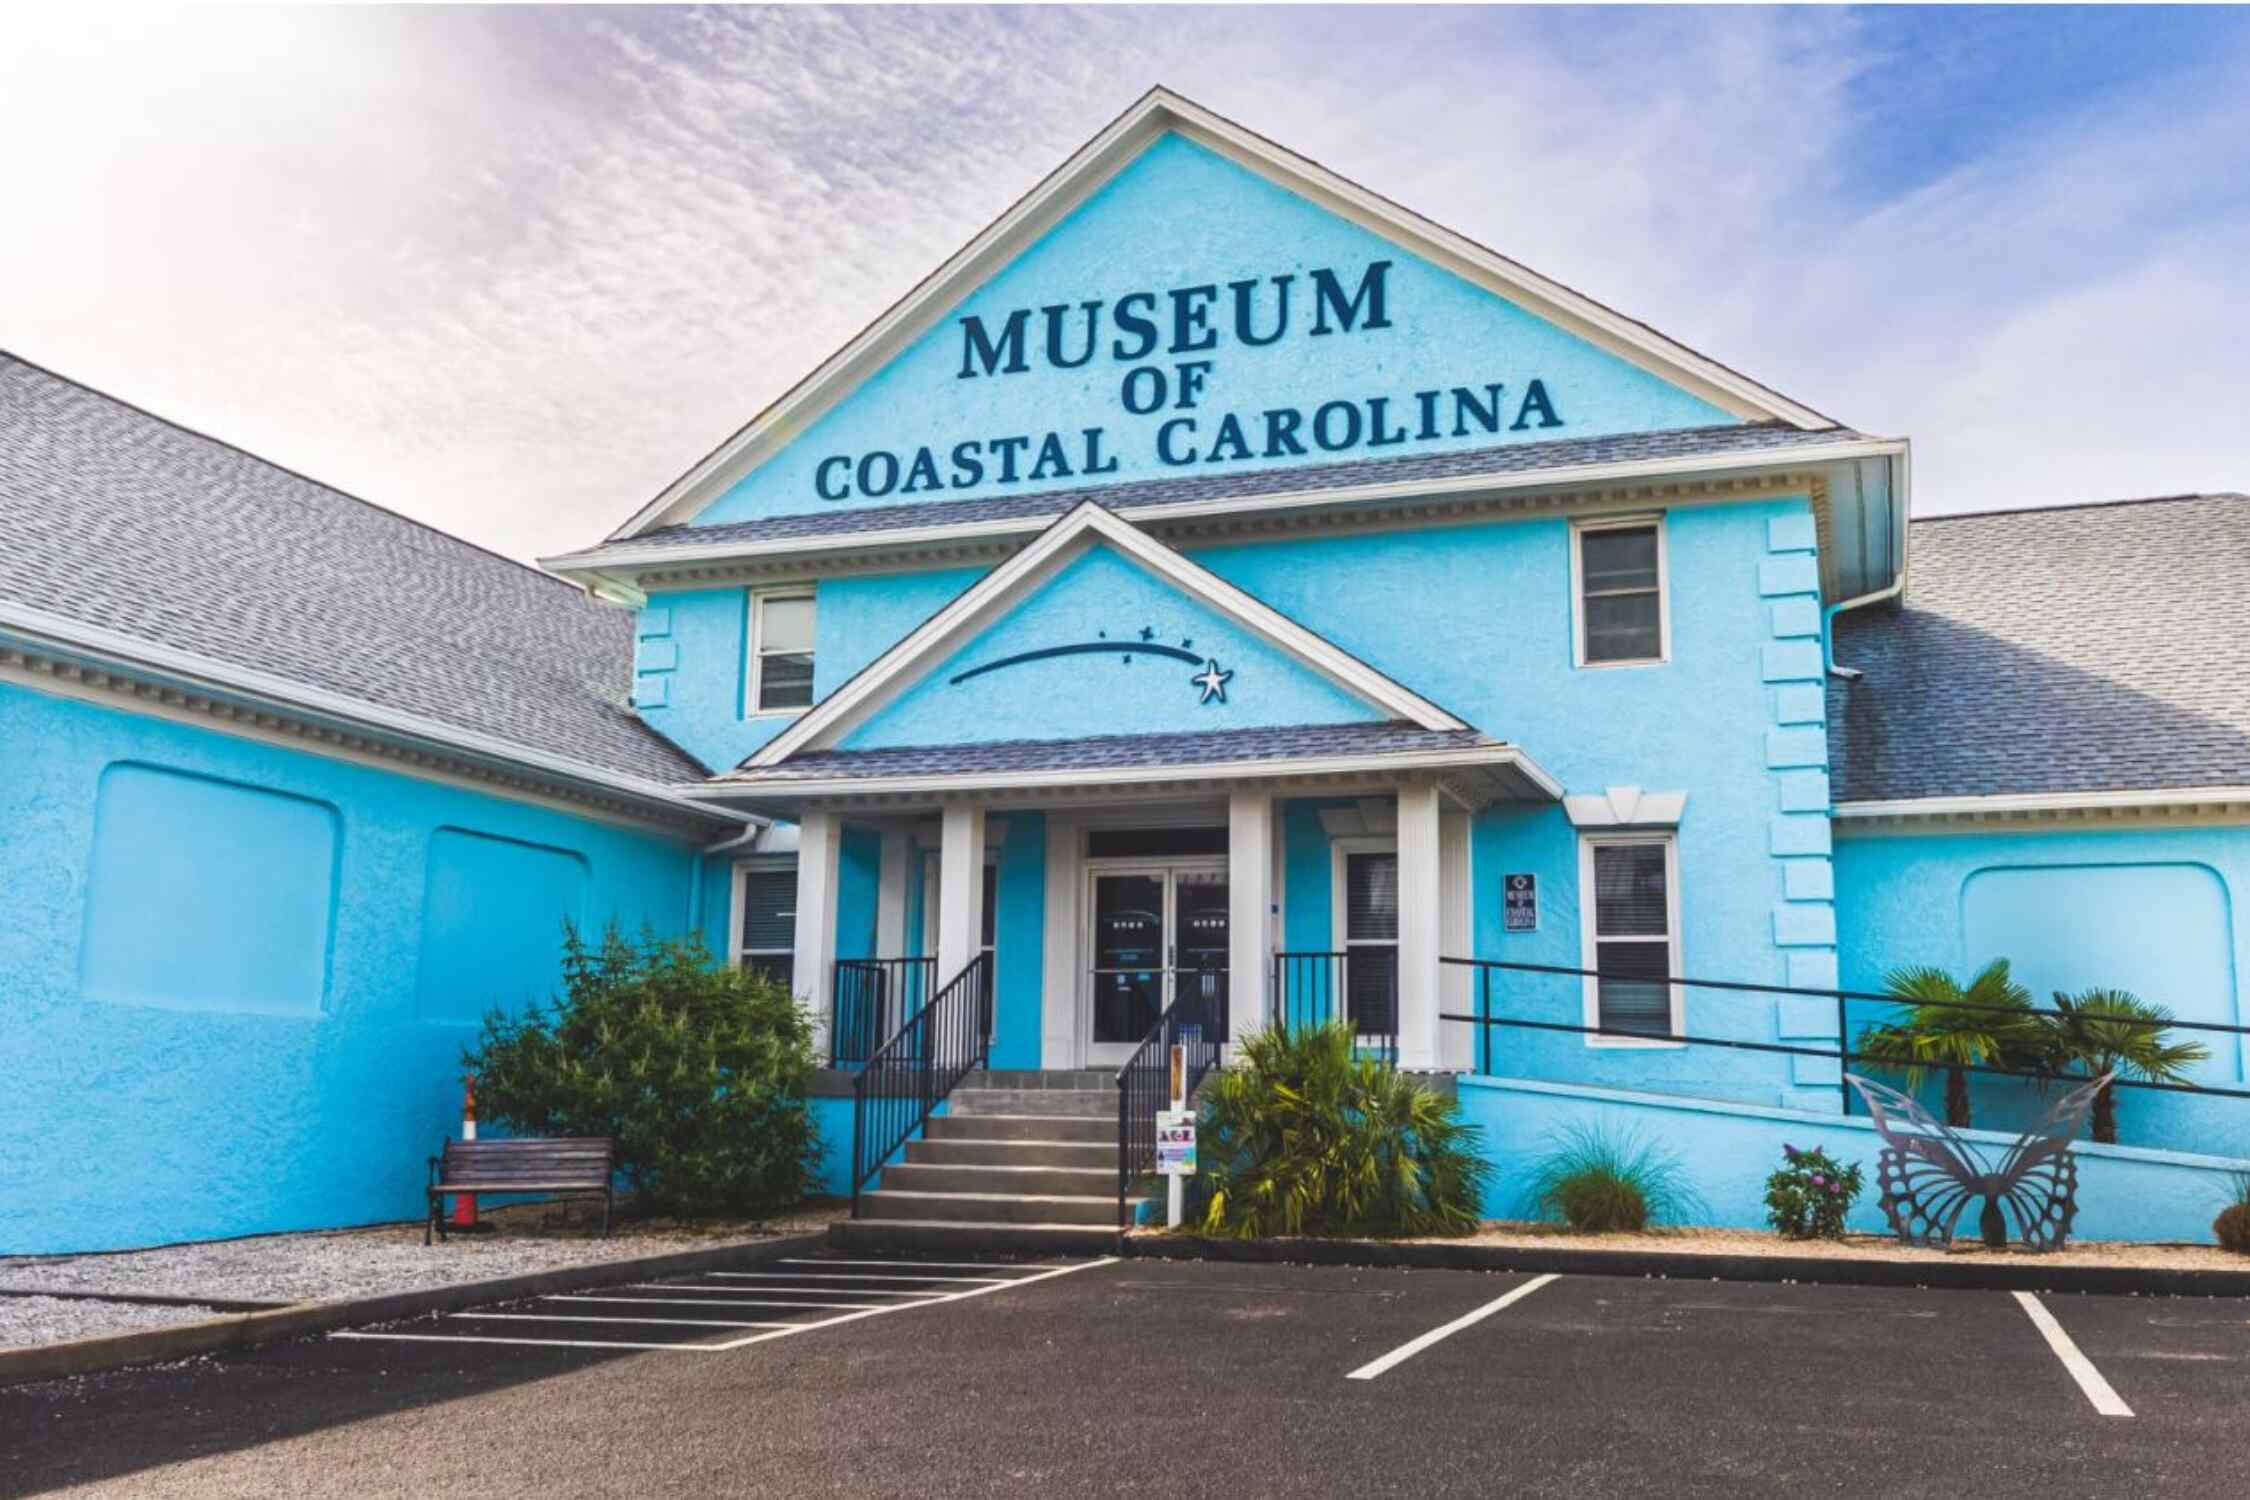 The Museum of Coastal Carolina